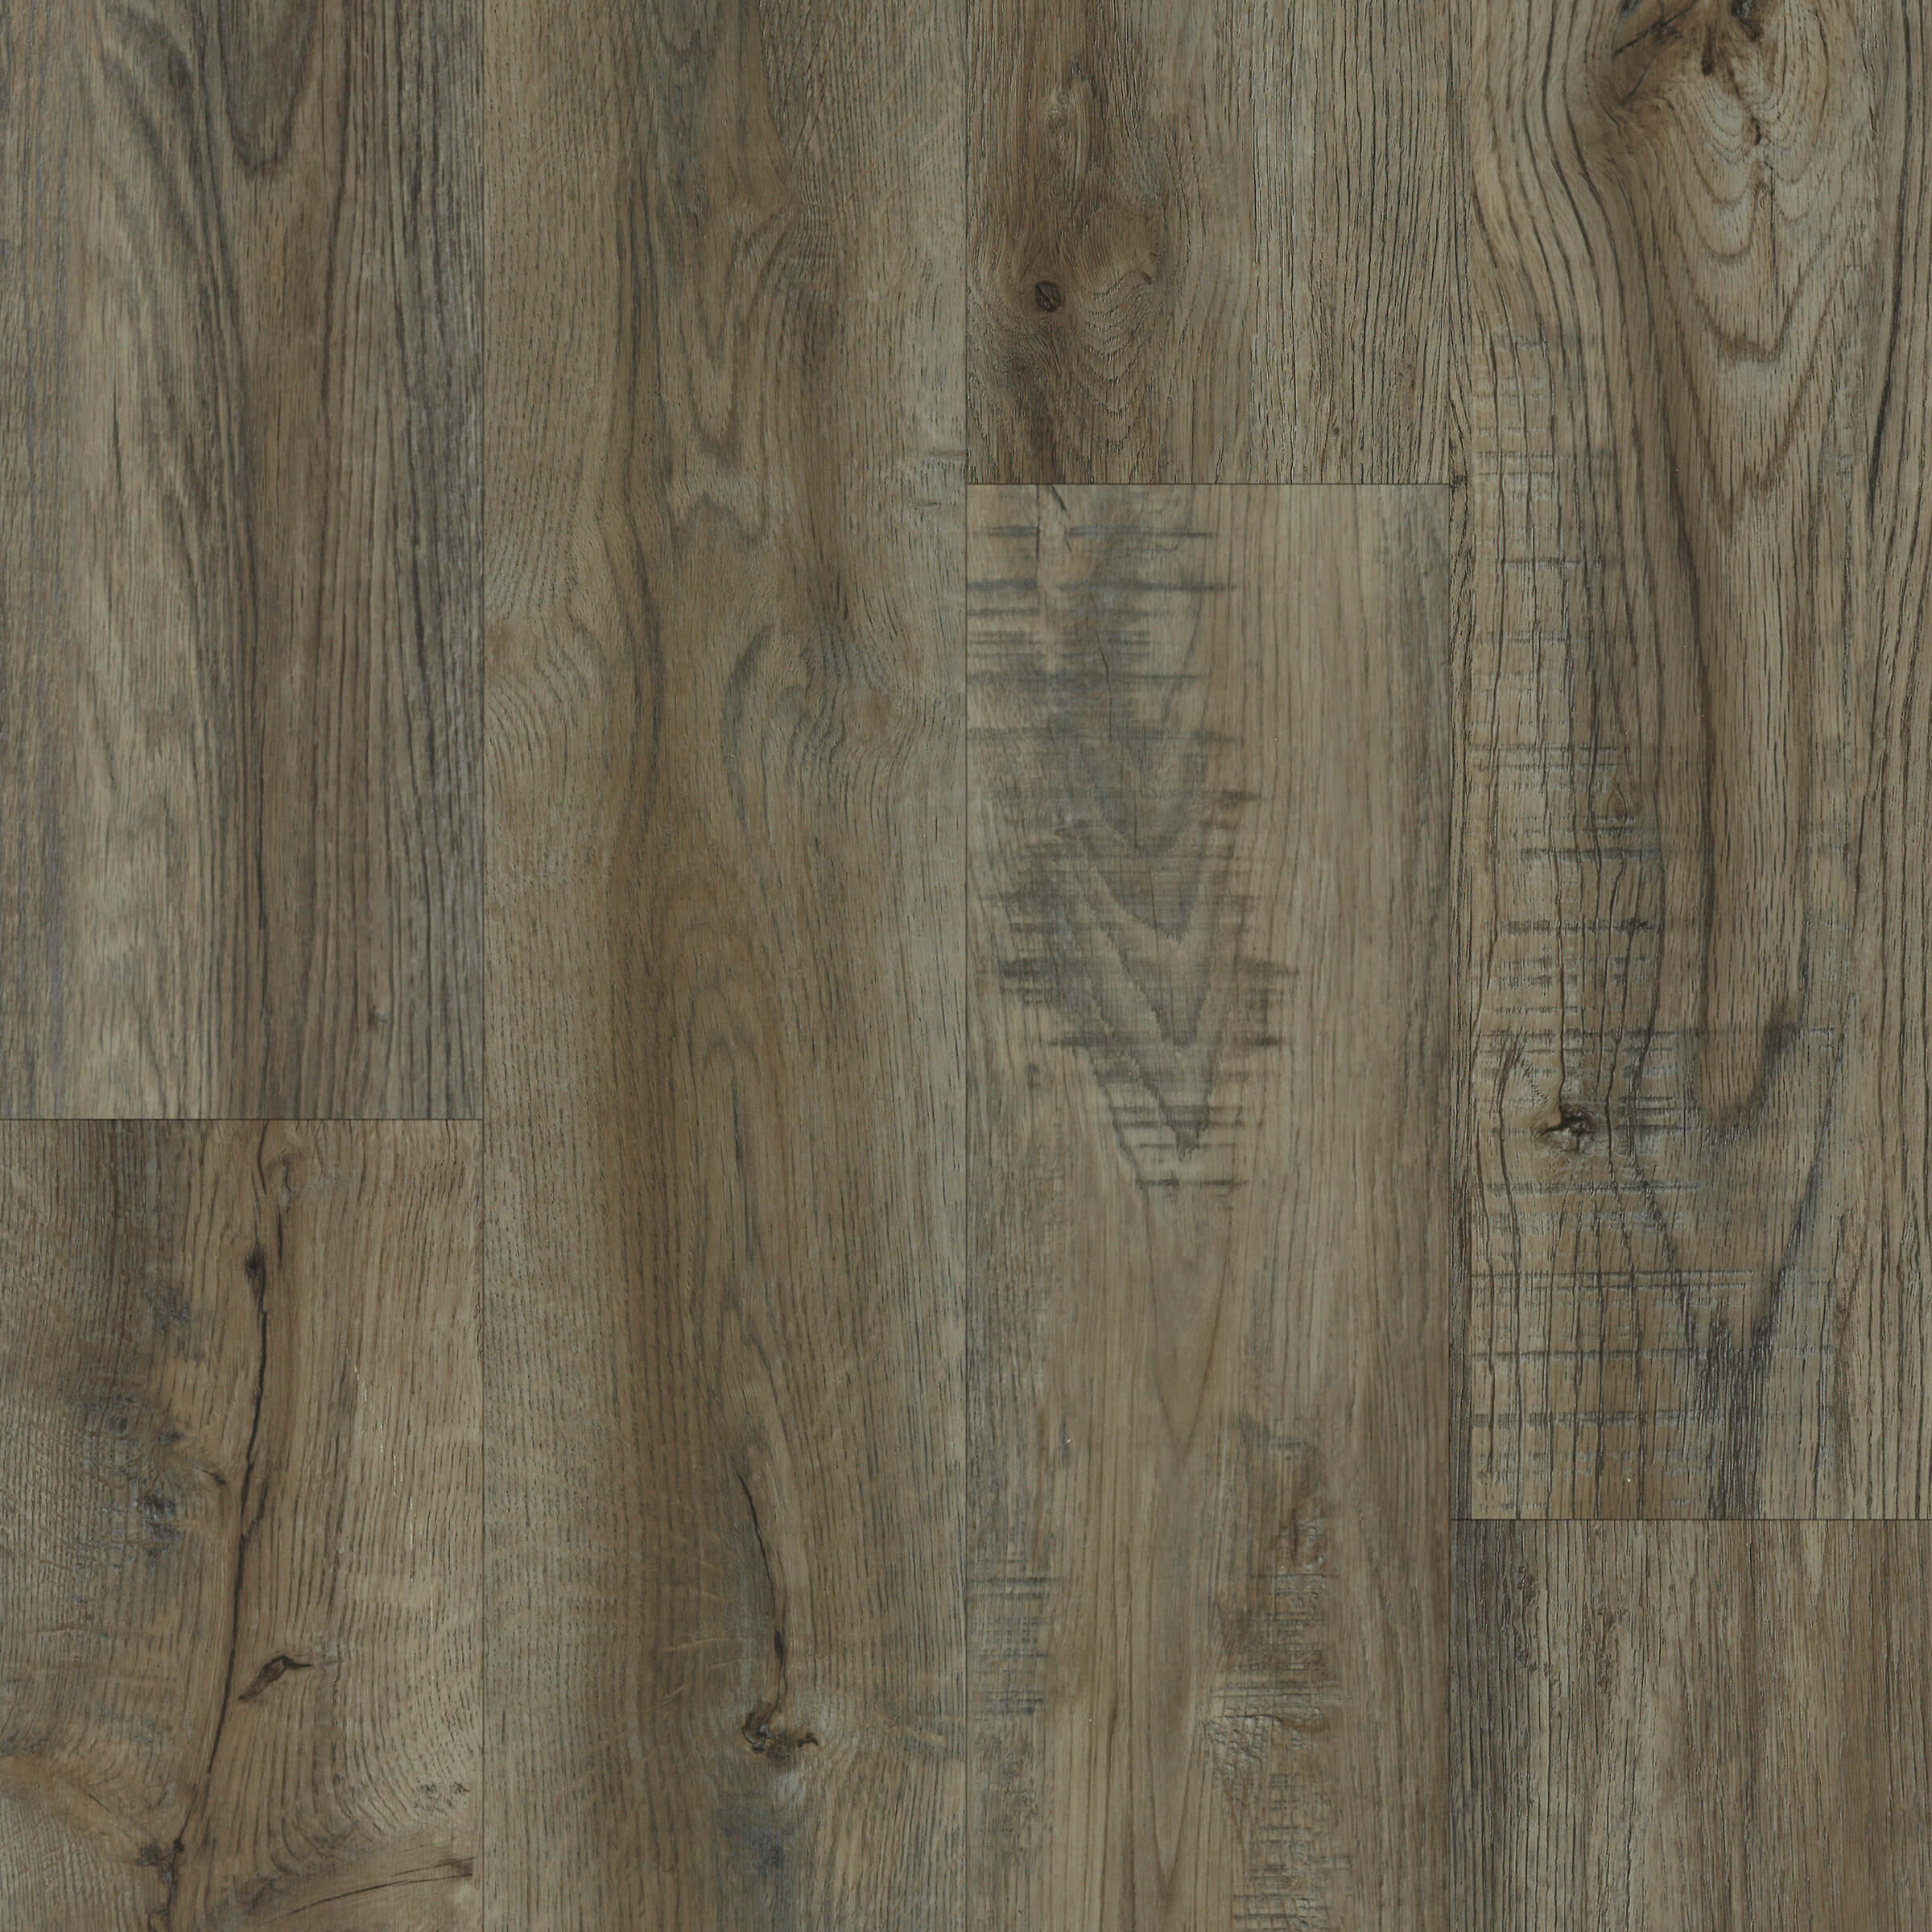 Luxury Vinyl Plank Tile Flooring, How To Cut Vinyl Plank Flooring With Cork Backing